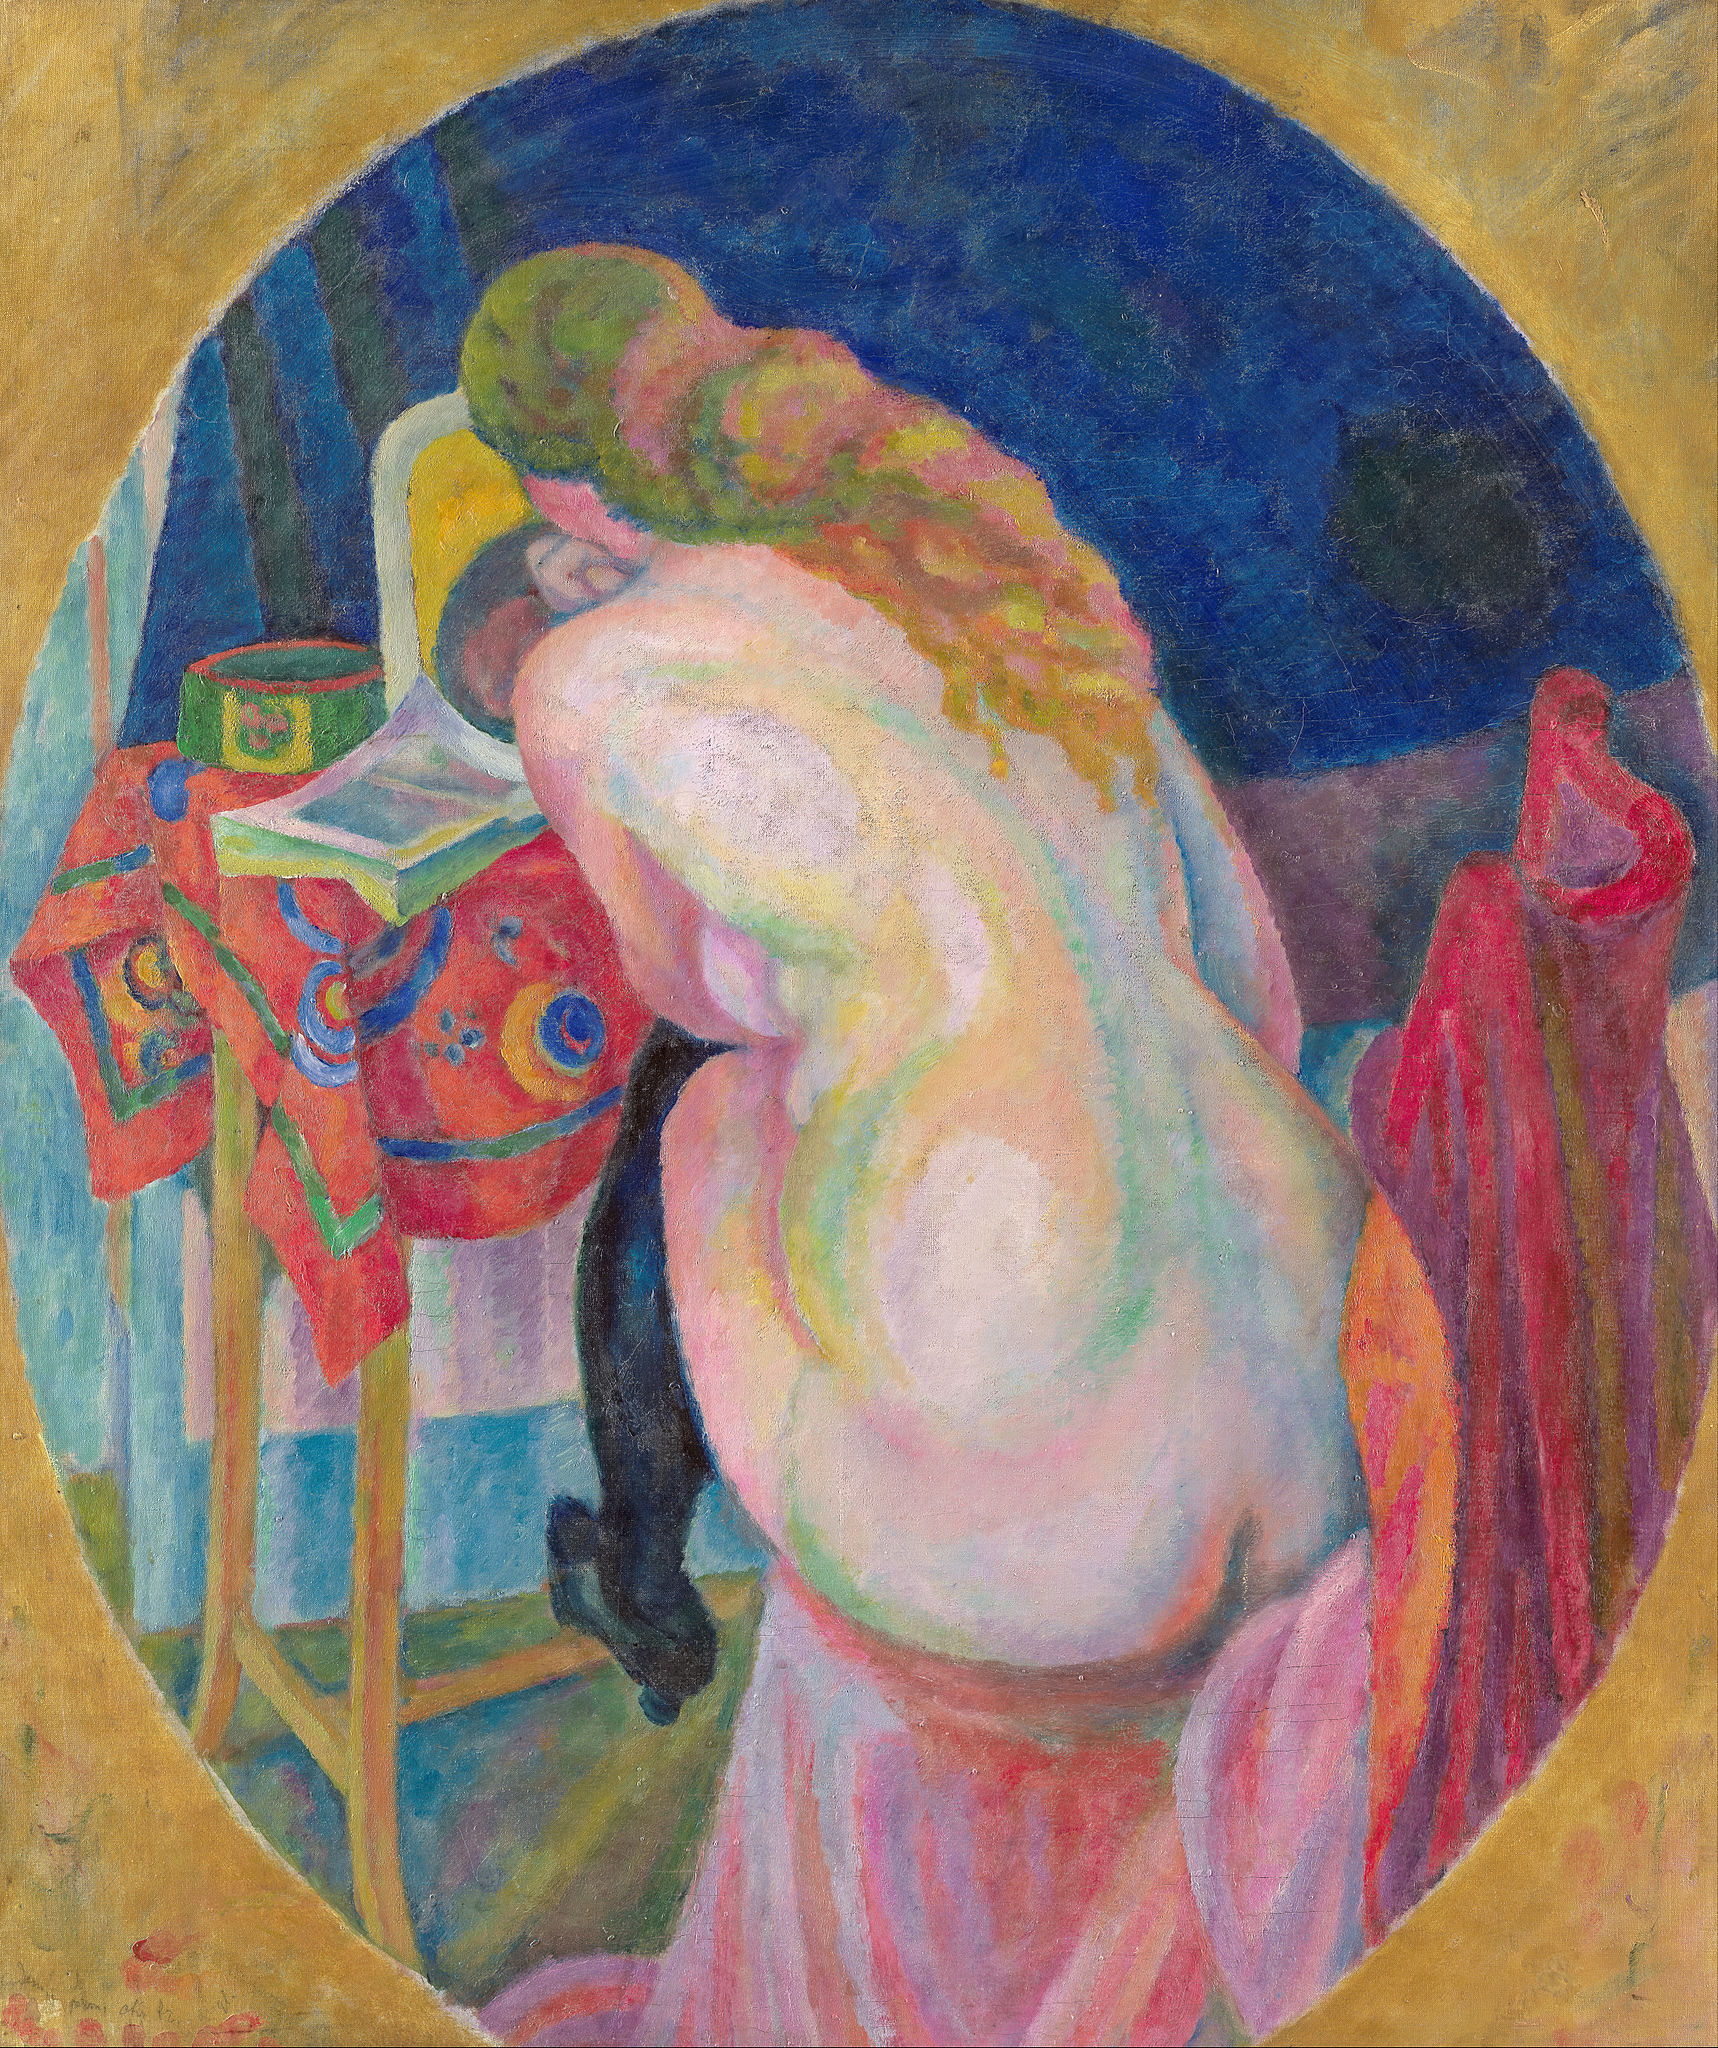 Okuyan Çıplak Kadın (orig. "Nude Woman Reading") by Robert Delaunay - 1915 - 86.2 x 72.4 cm National Gallery of Victoria